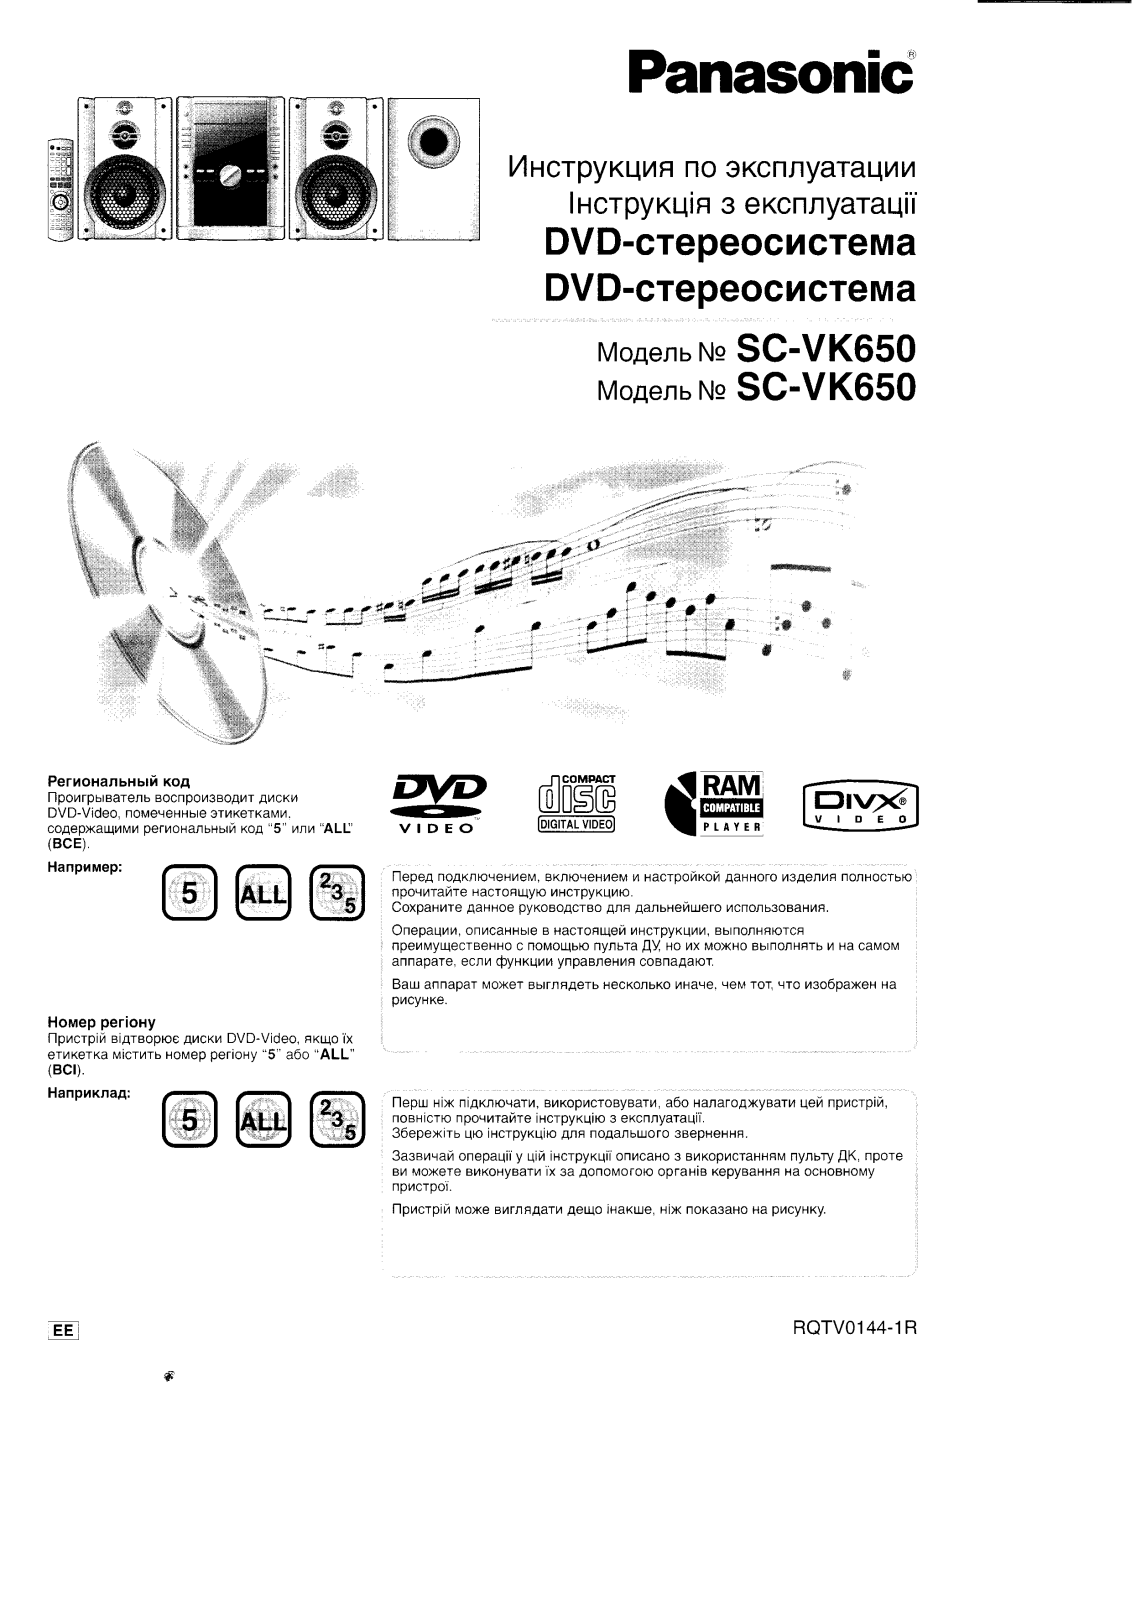 Panasonic SC-VK650 EE-S User Manual